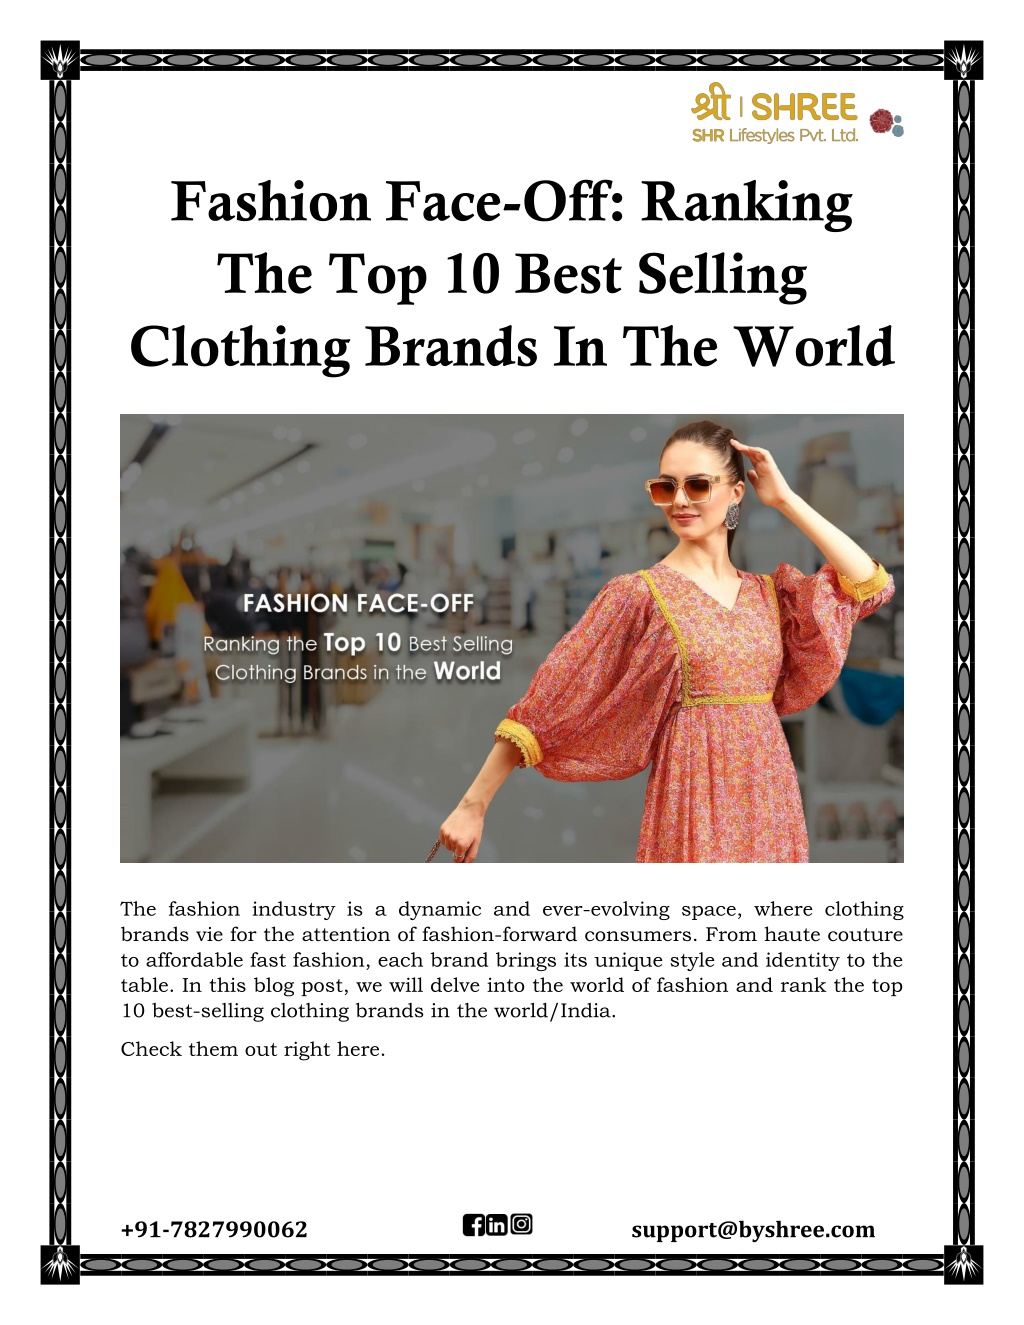 https://image7.slideserve.com/12314778/fashion-face-off-ranking-the-top-10-best-selling-l.jpg